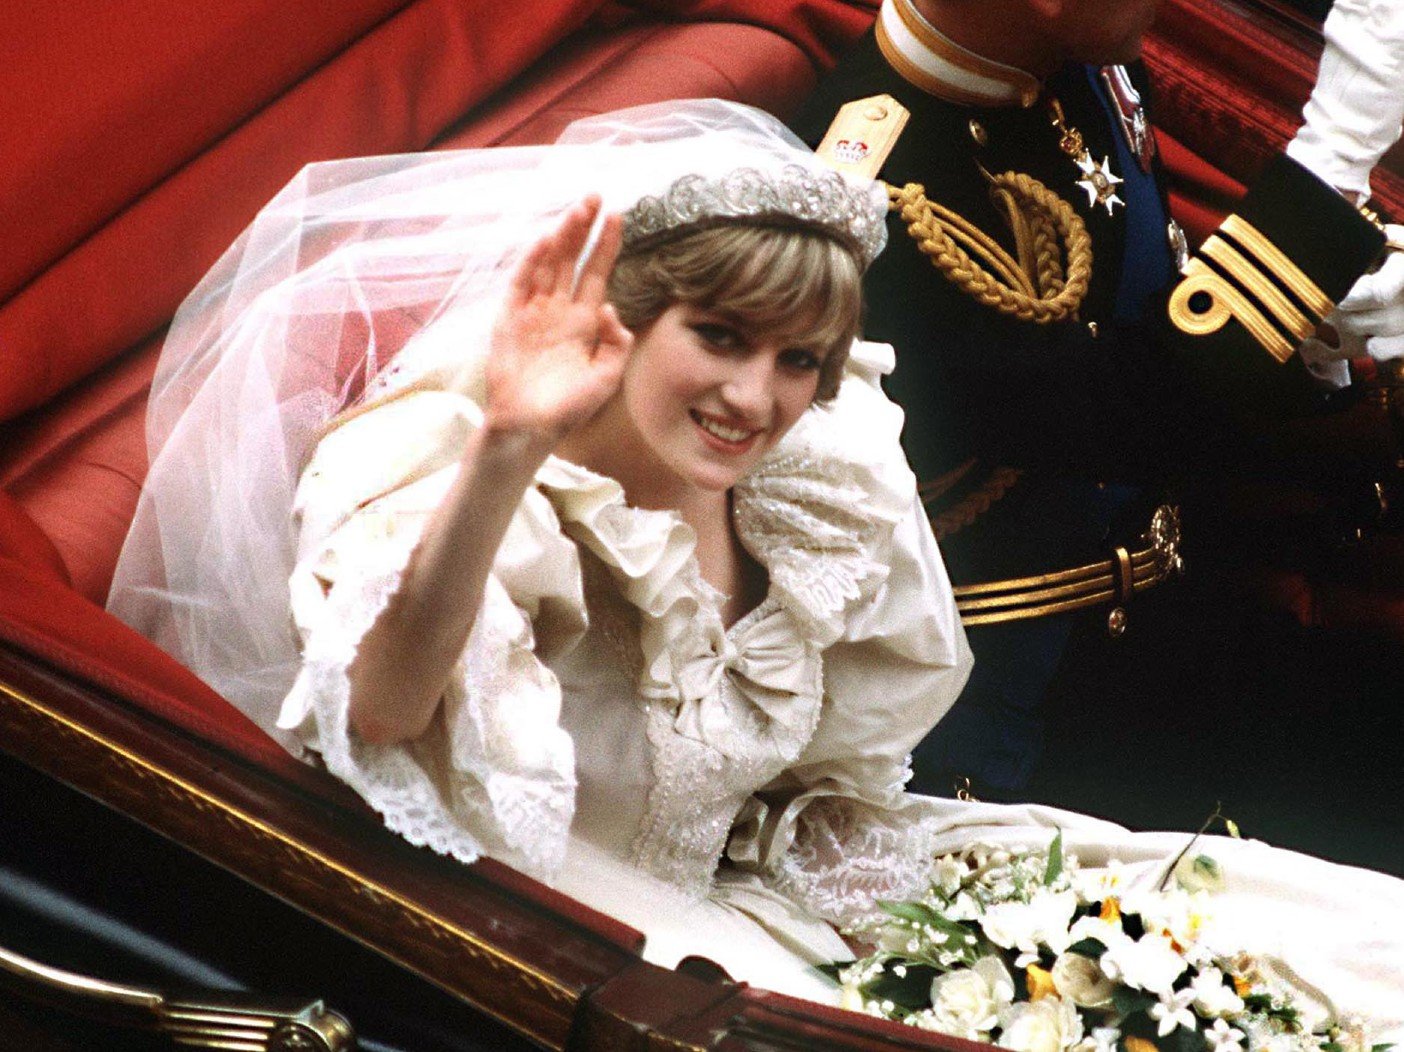 Why was Princess Diana’s wedding dress wrinkled?